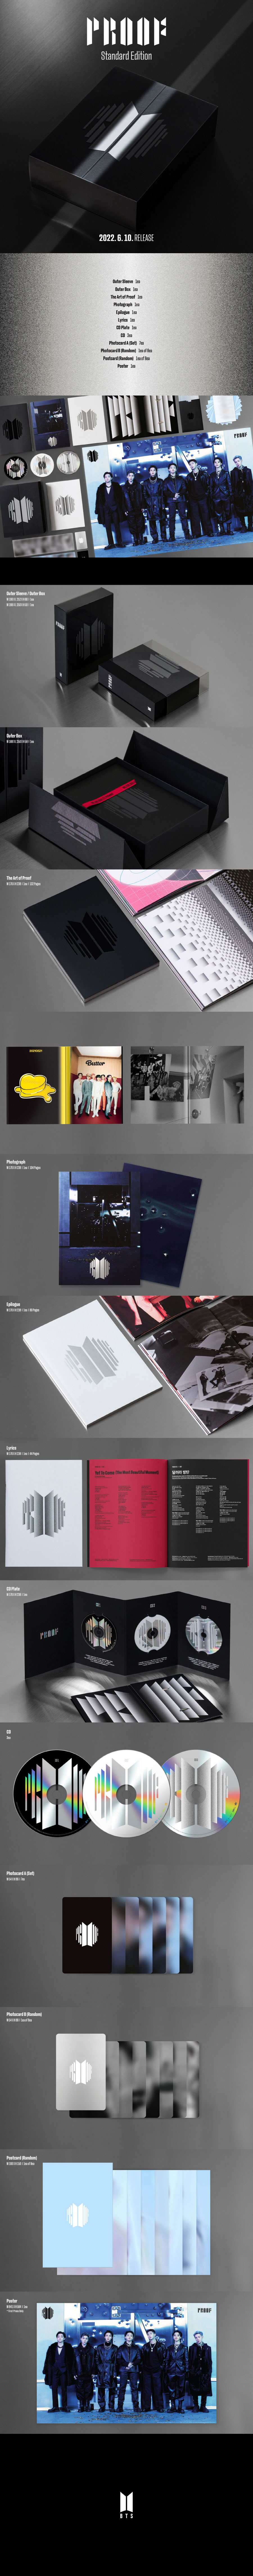 BTS - Proof (Standard+Compact SET) / Anthology Album - Kmall24